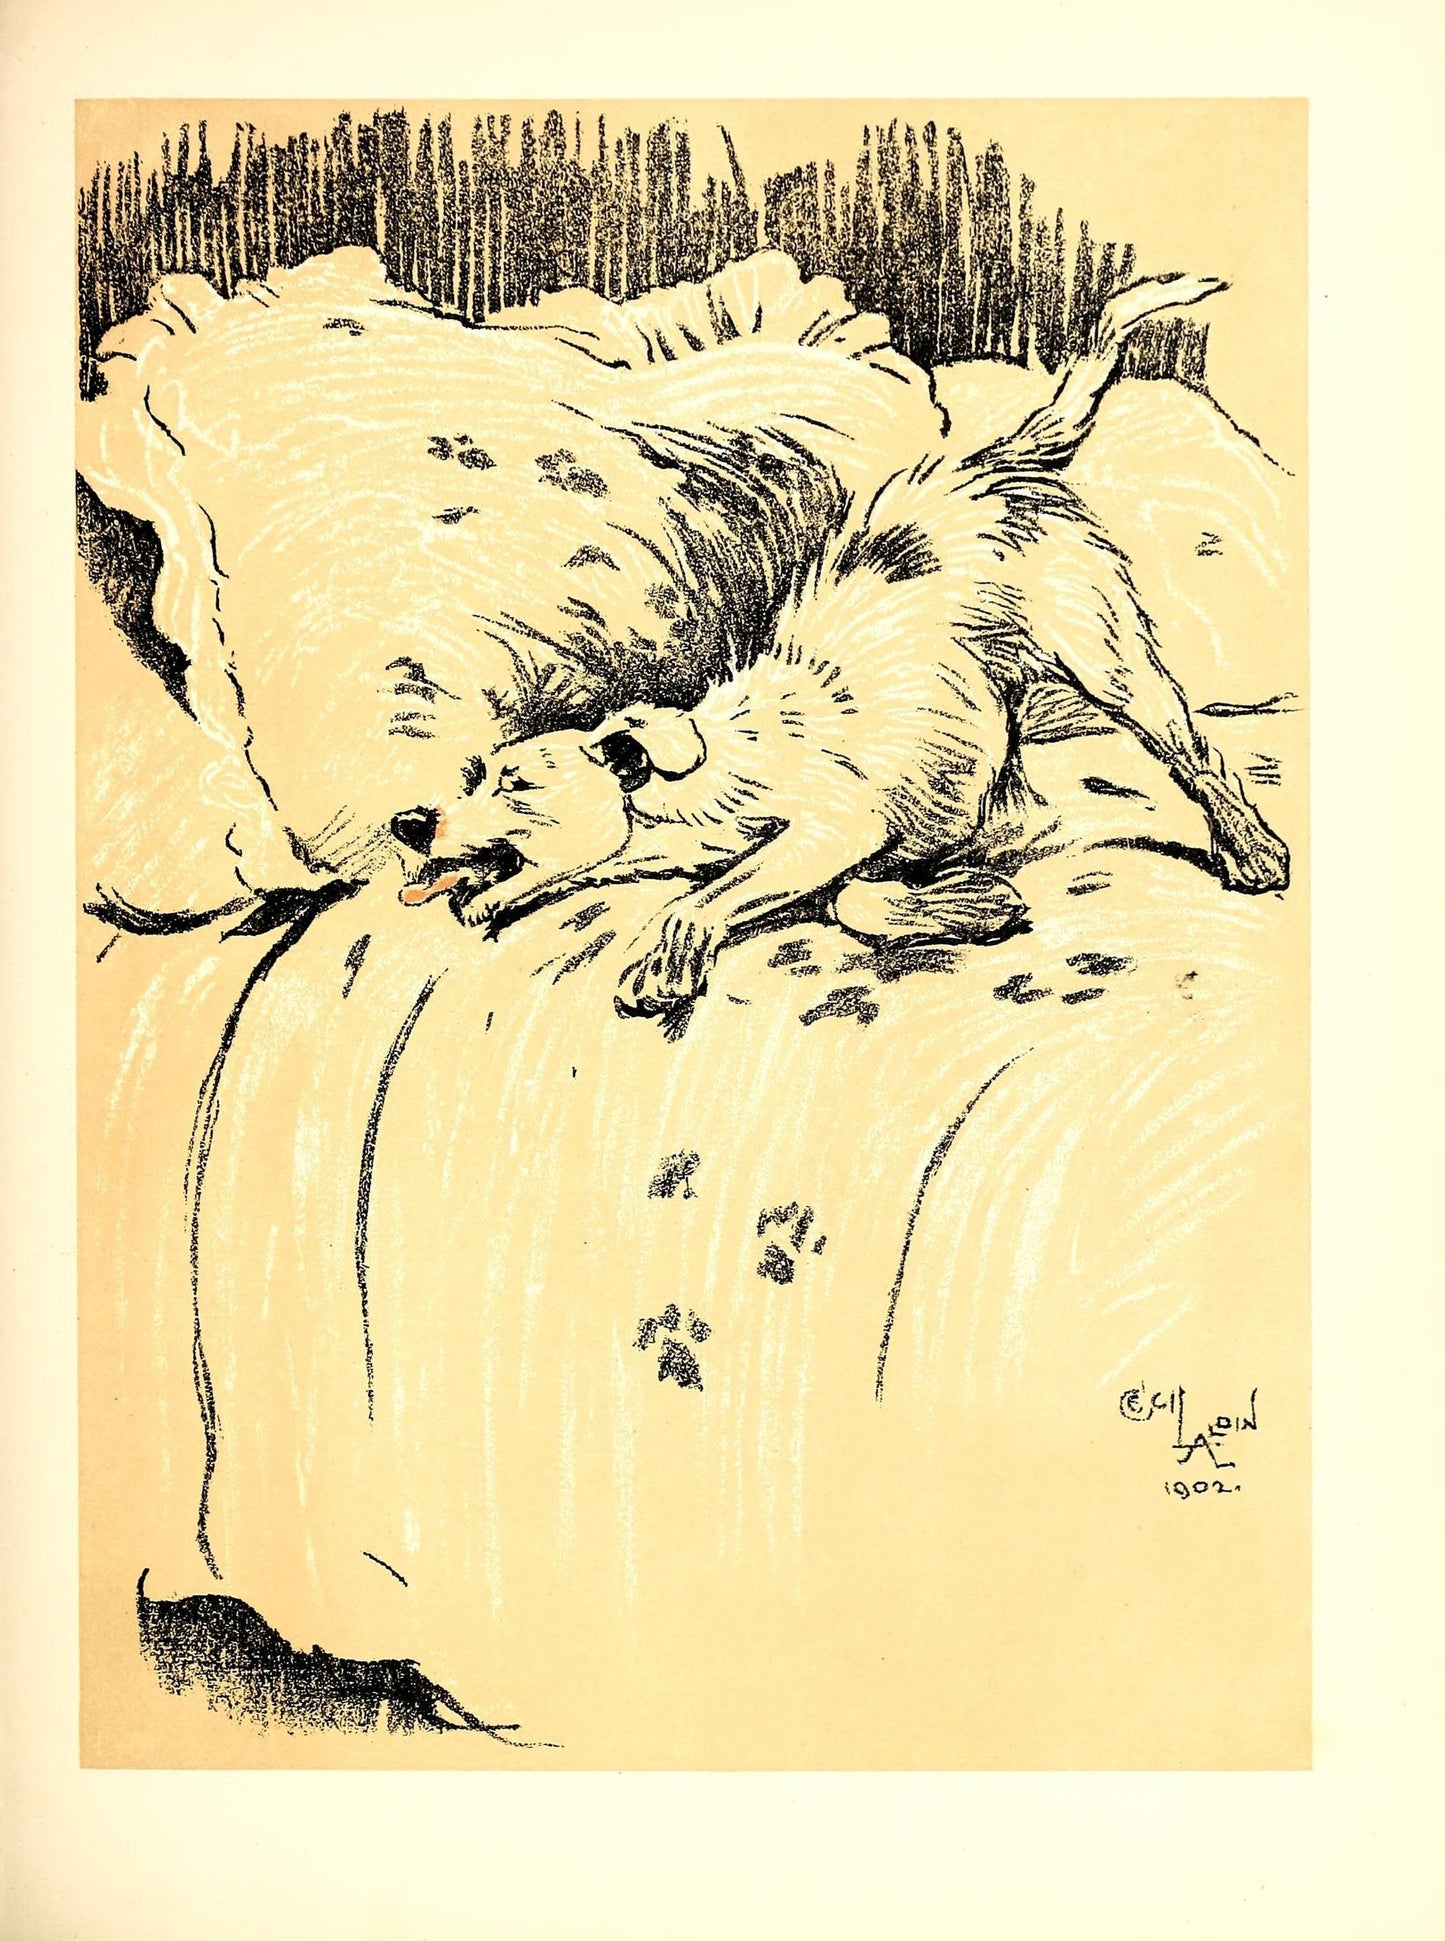 Muddy paws dog (1900s) | Vintage dog prints | Cecil Aldin Posters, Prints, & Visual Artwork The Trumpet Shop   